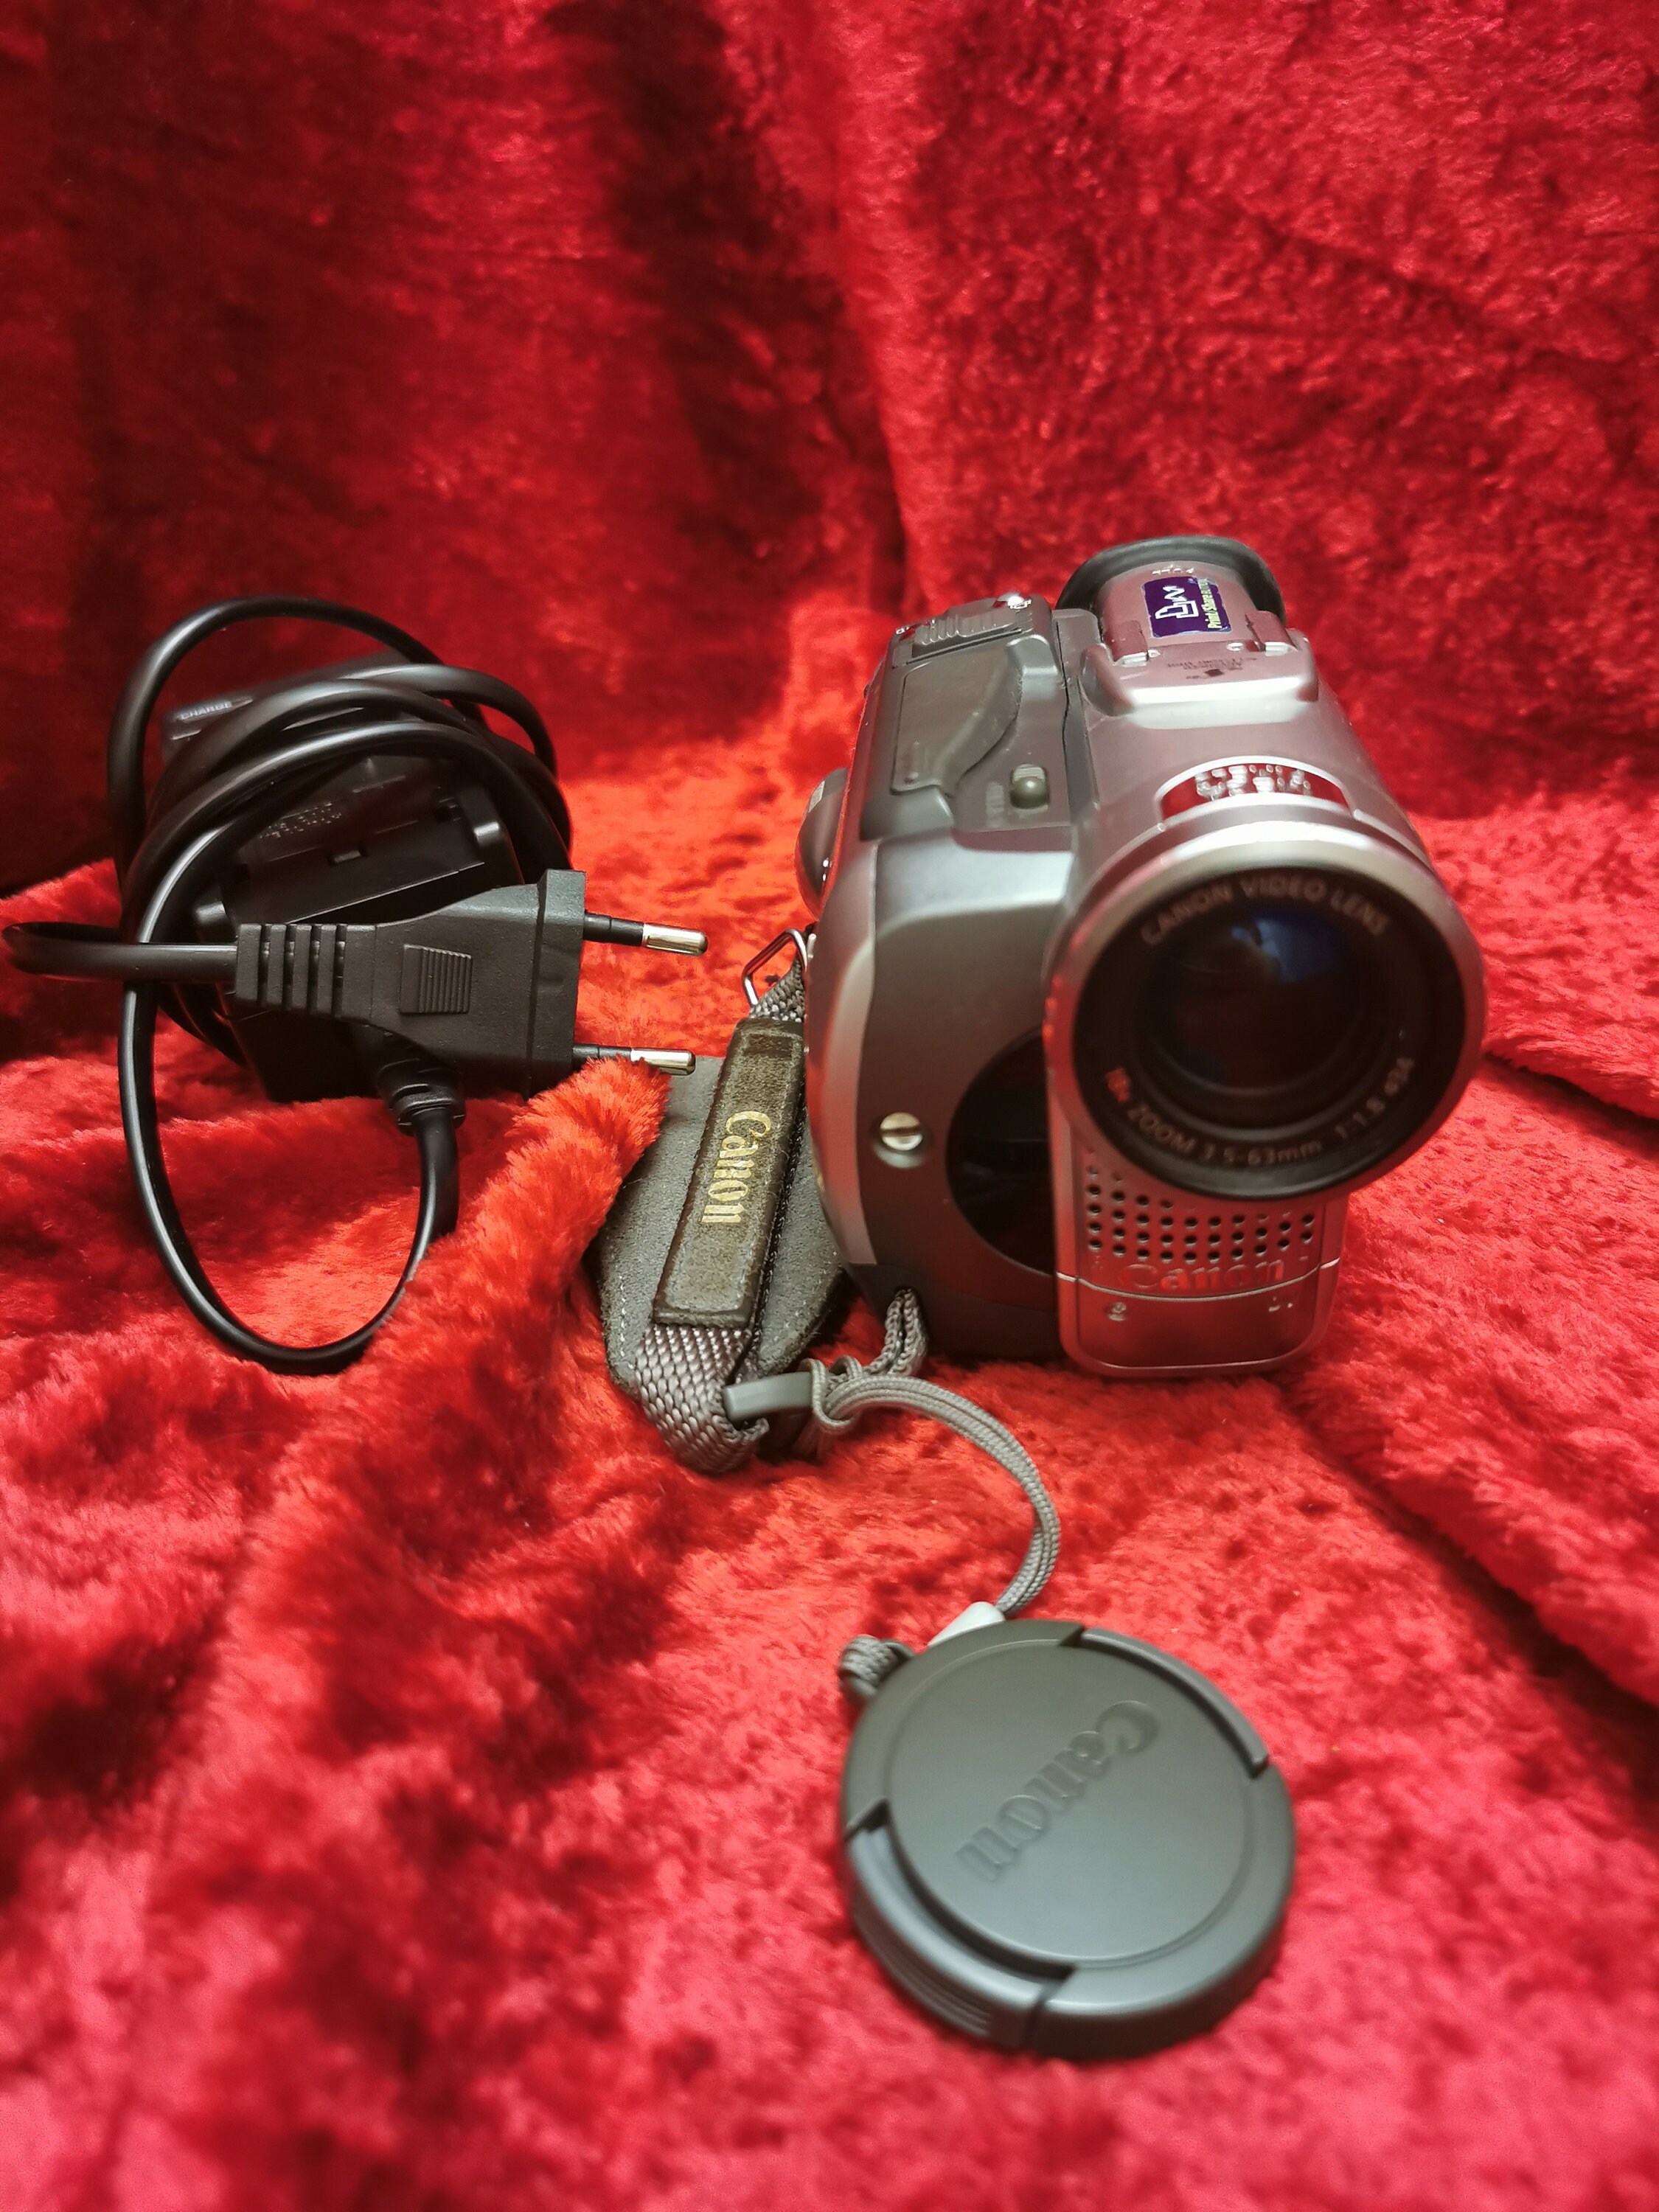 Karu paste Mona Lisa Digital Video Camera Canon MVX 250 - Etsy